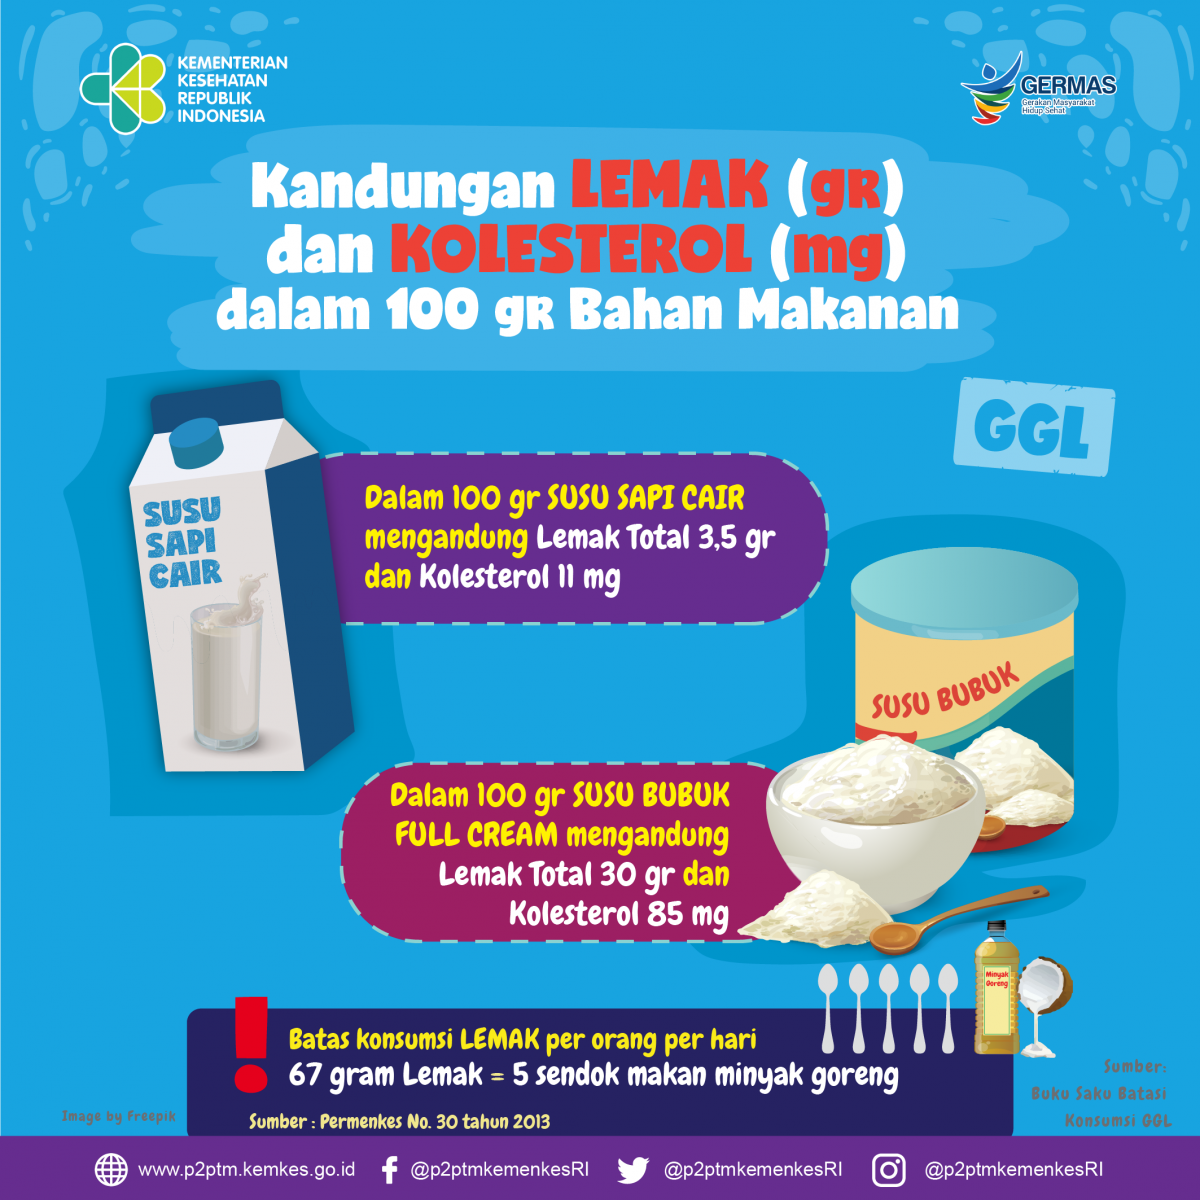 Kandungan Lemak (gr) dan Kolesterol (mg) dalam 100 gr susu sapi cair dan susu bubuk full cream